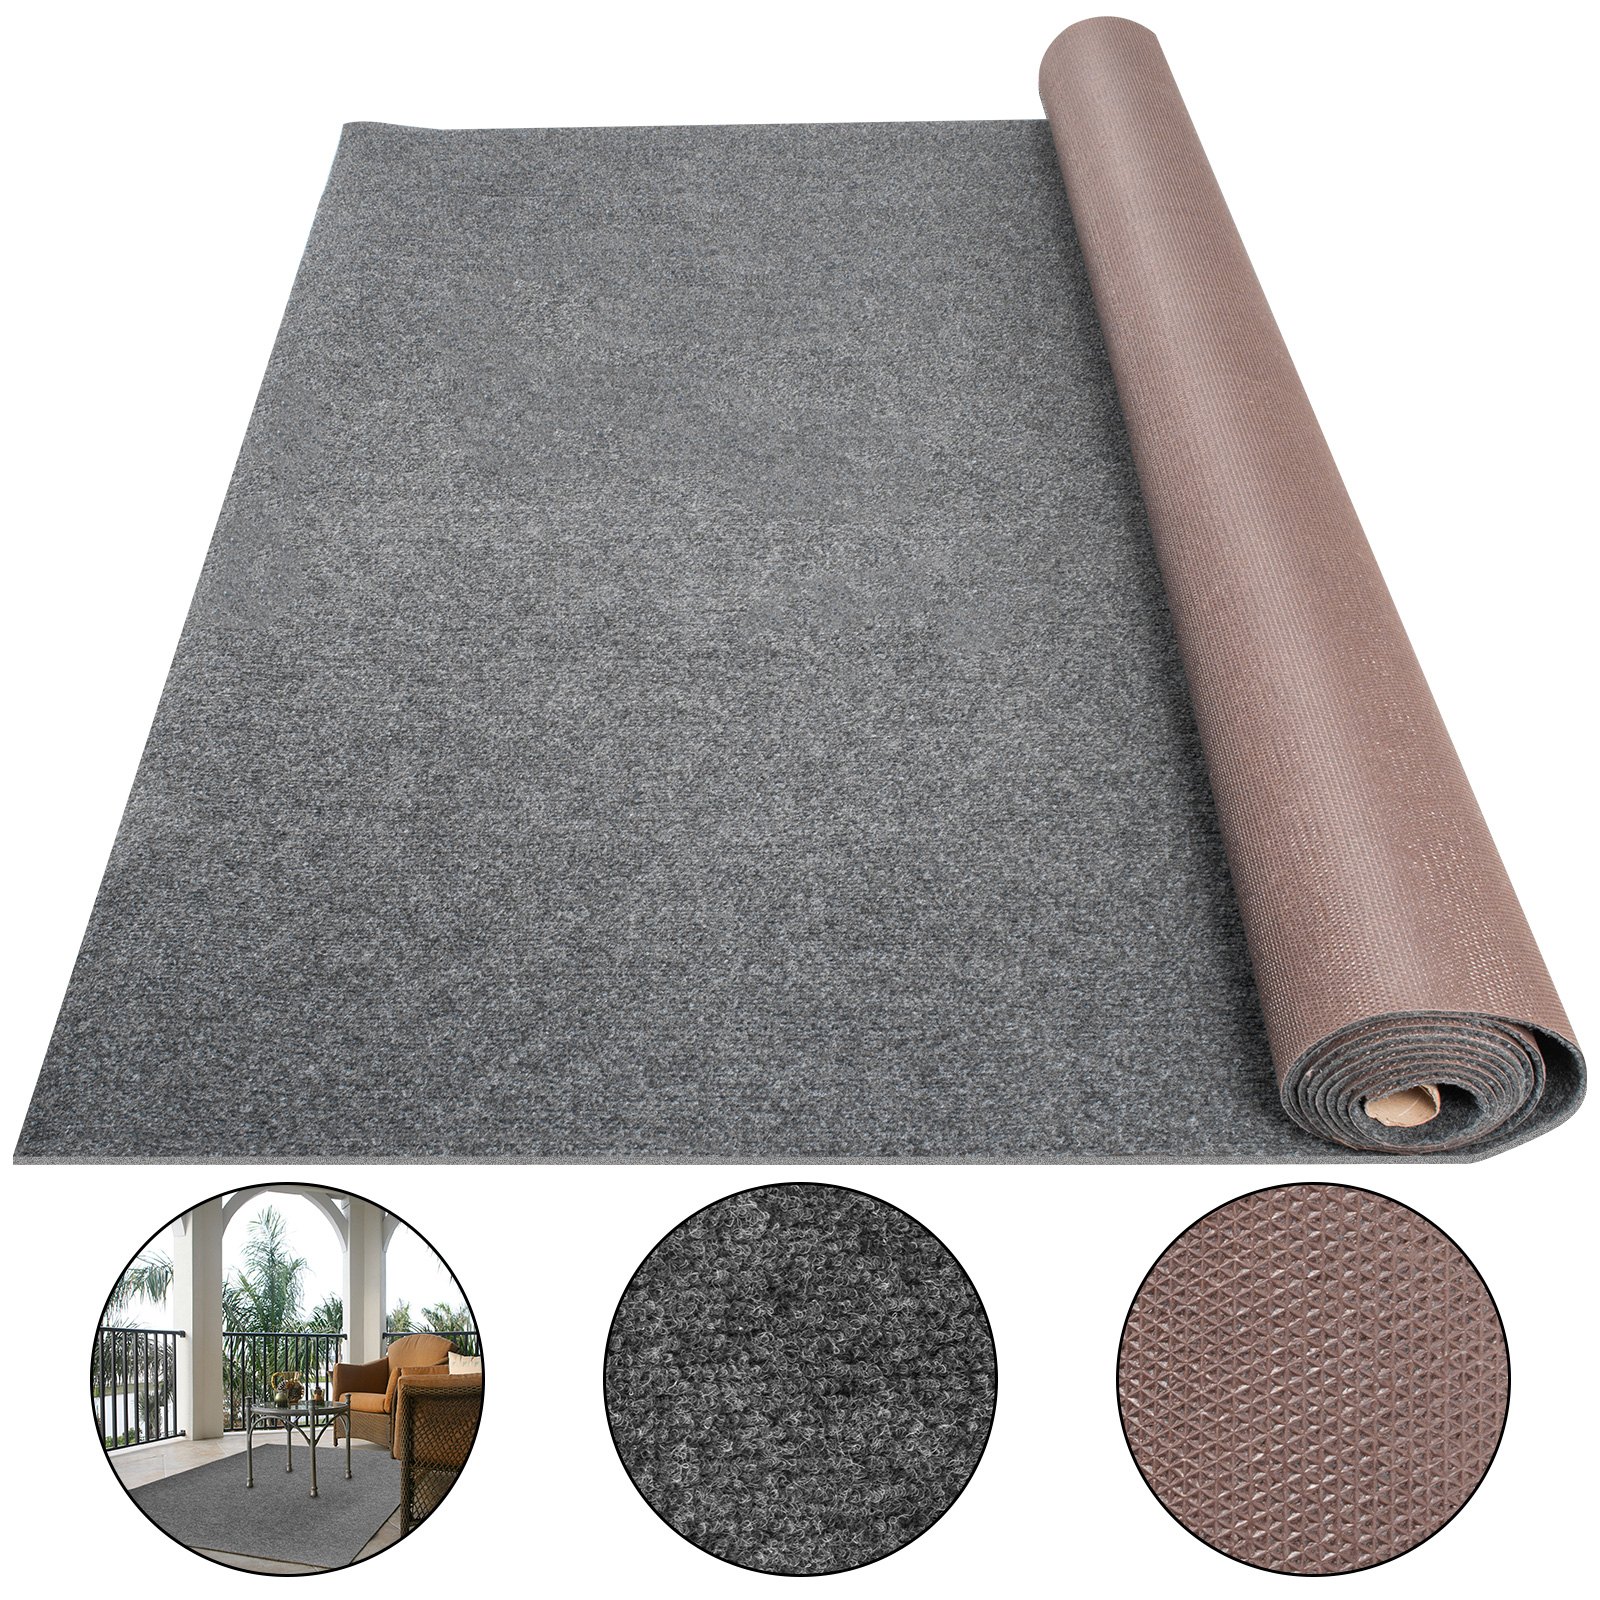 Vevor Boat Carpet Marine Carpet 6x18' Roll In/outdoor Carpet Rug Anti-slide Gray от Vevor Many GEOs